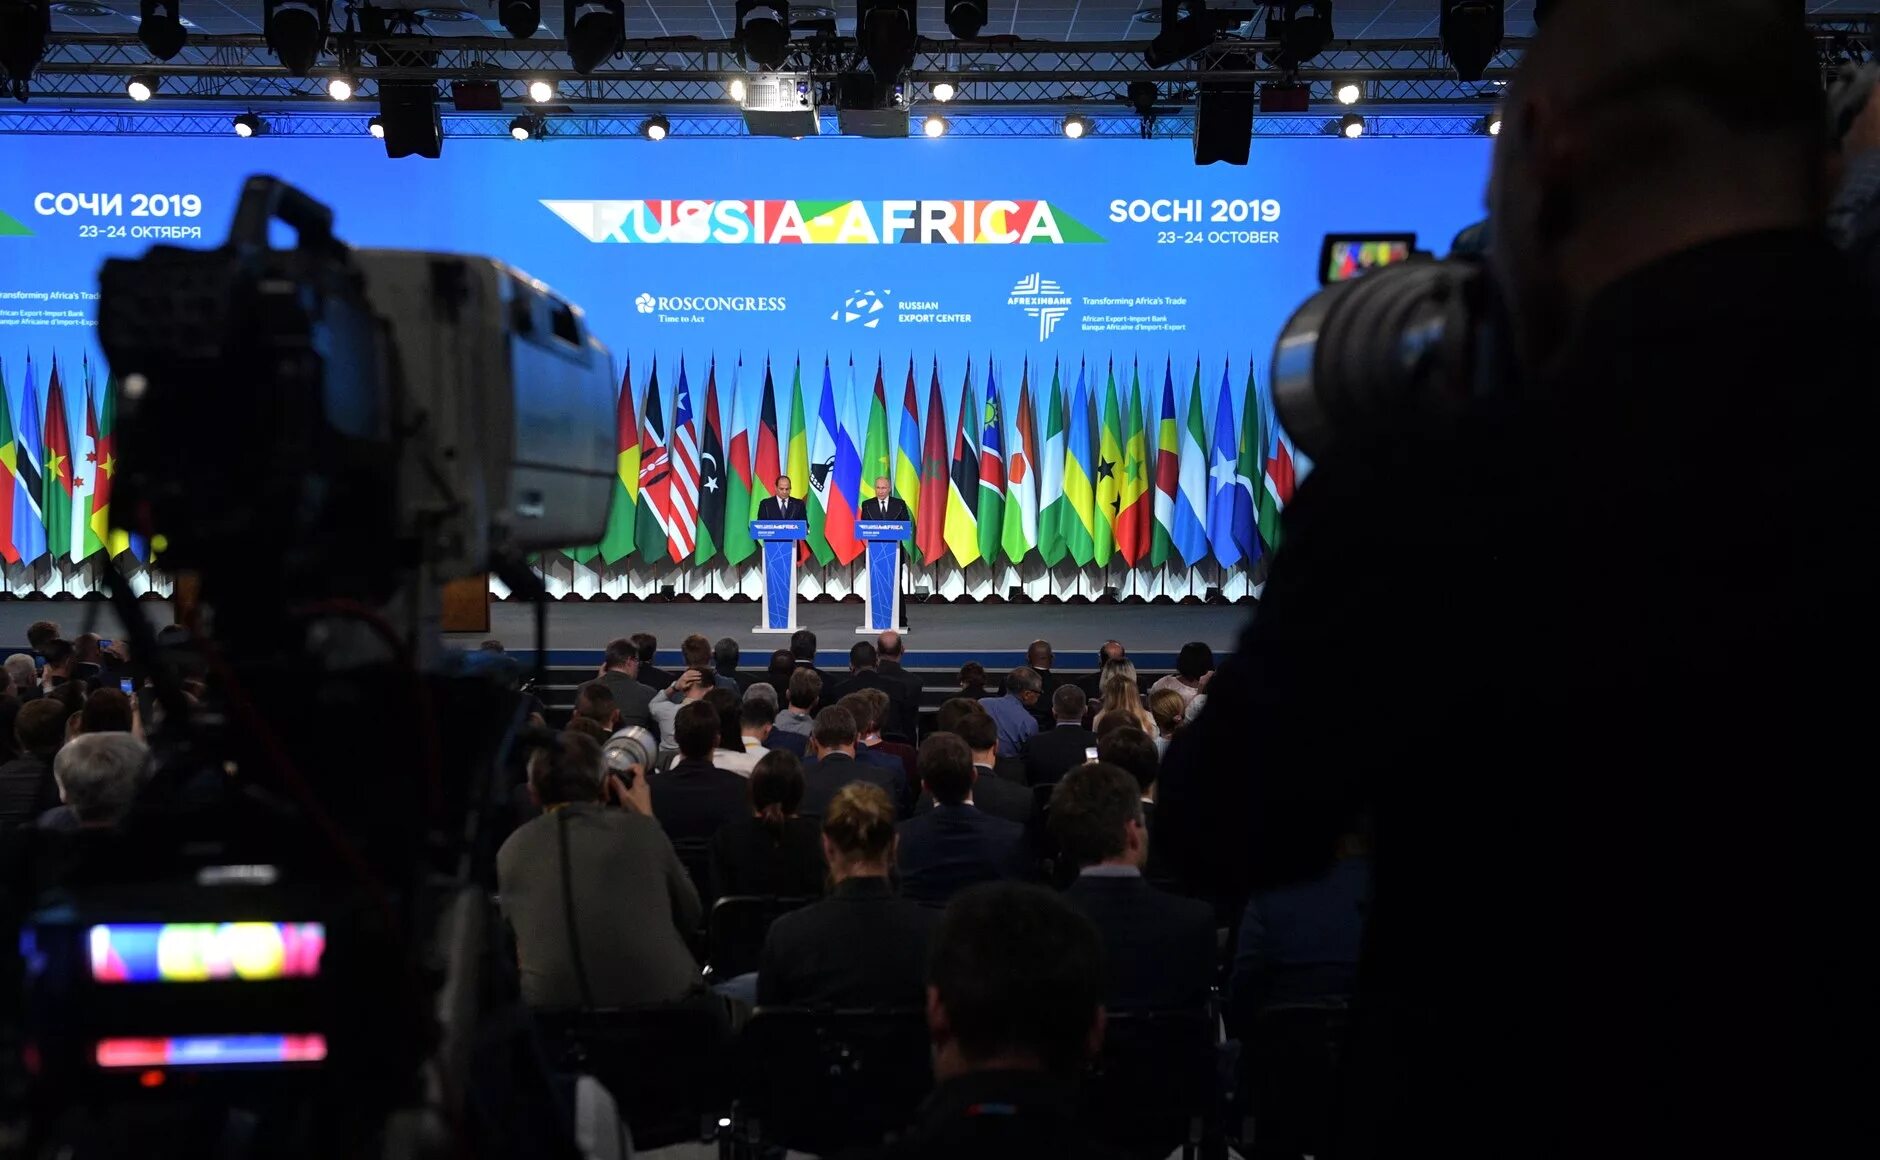 South africa russia. Саммит Россия Африка 2019 Сочи. Саммит "Россия - Африка" в Сочи 2021. Россия Африка саммит 23-24 октября 2019.